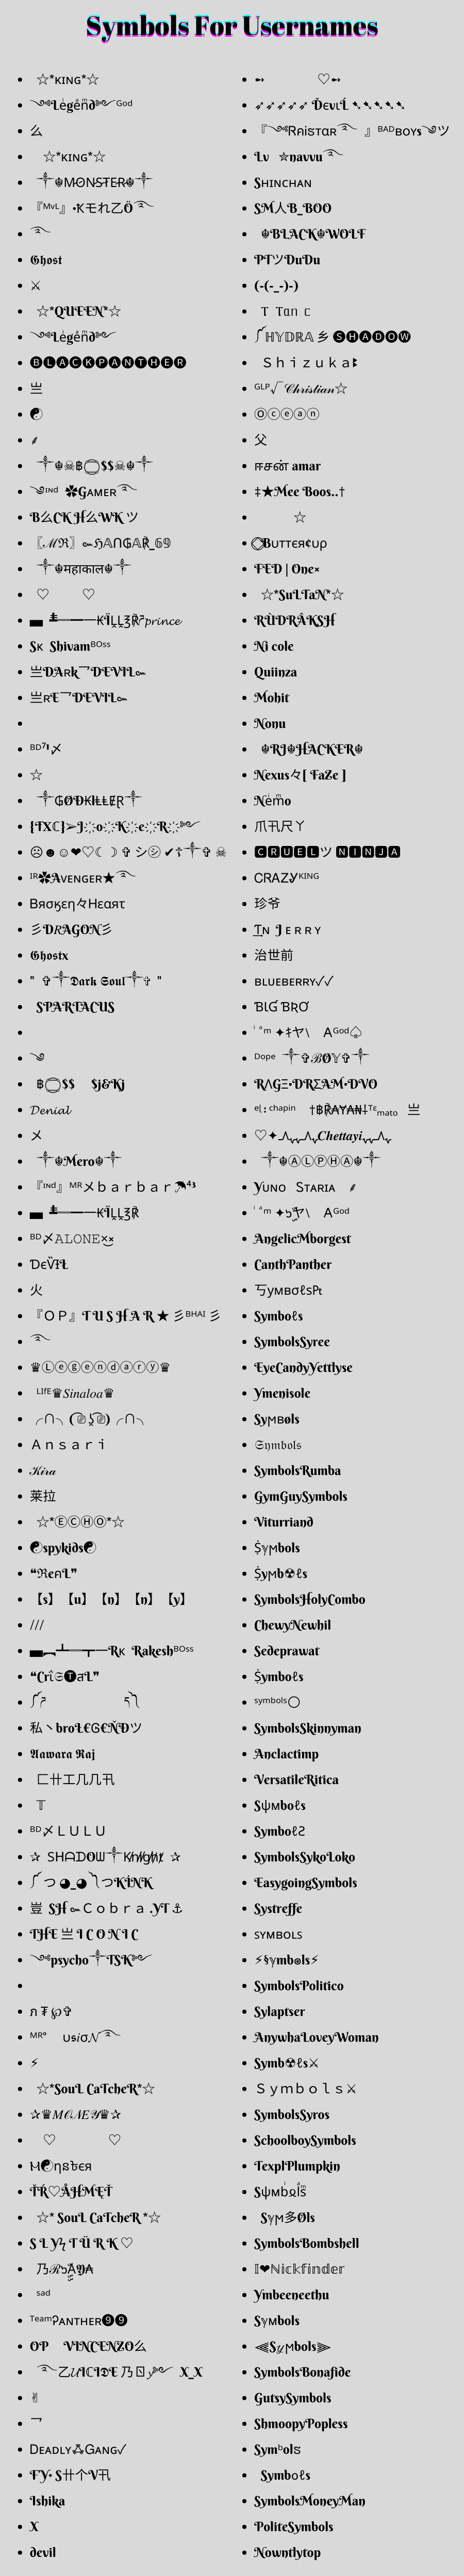 Symbols For Usernames